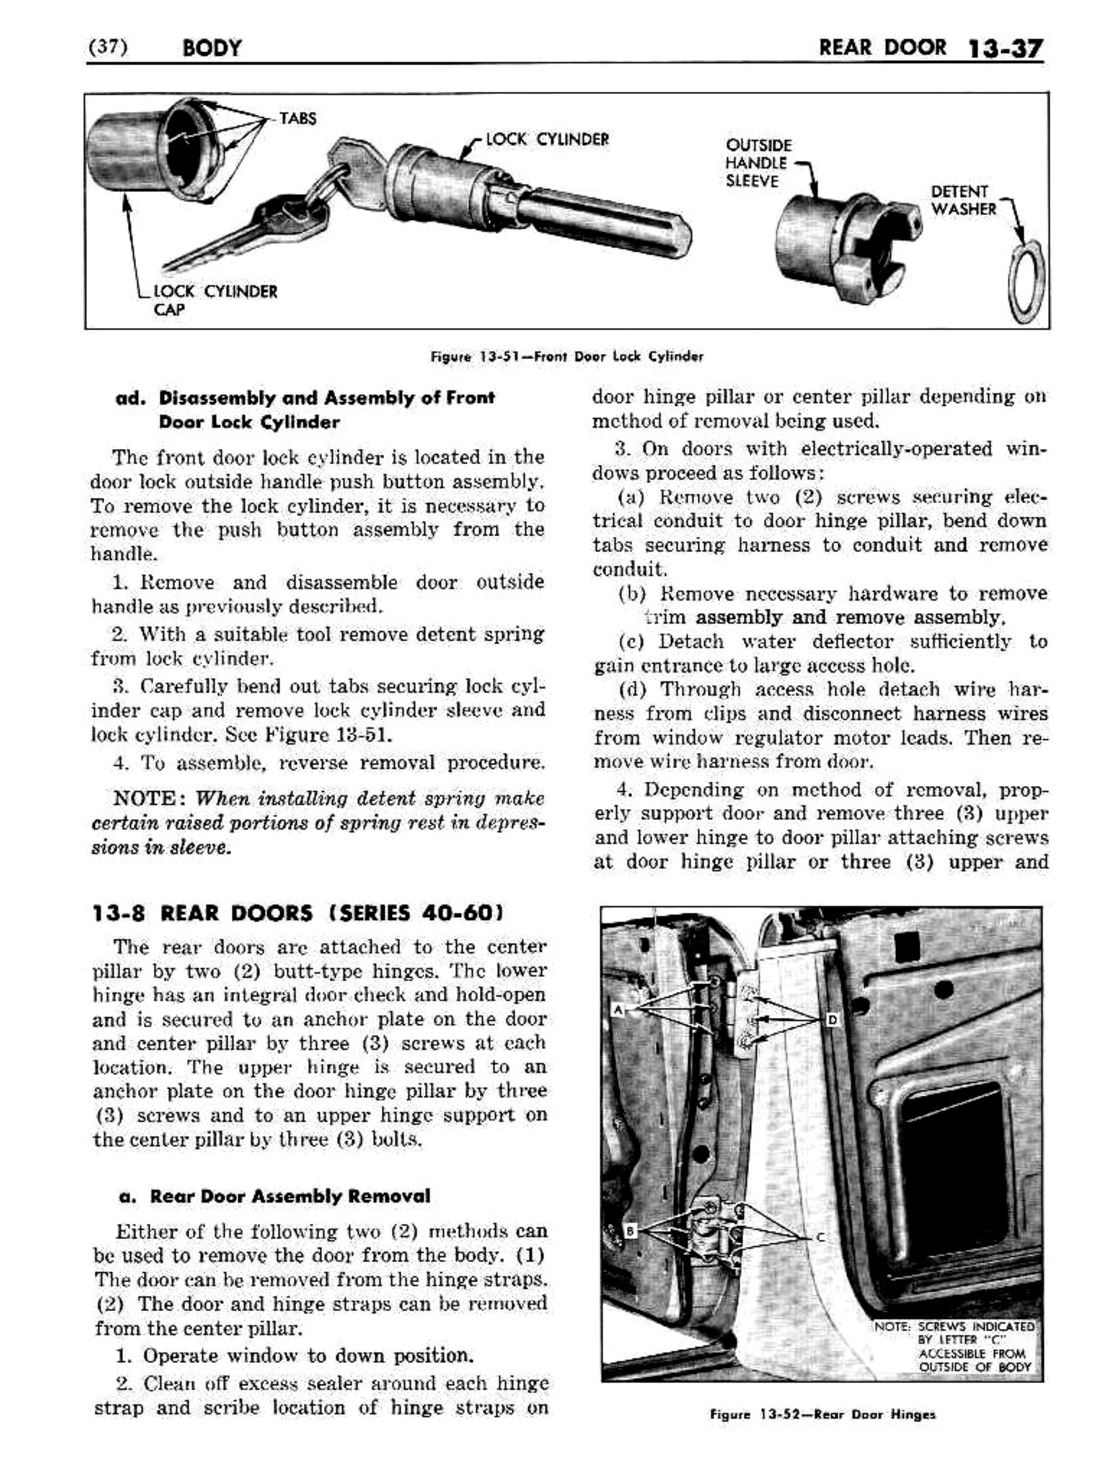 n_1958 Buick Body Service Manual-038-038.jpg